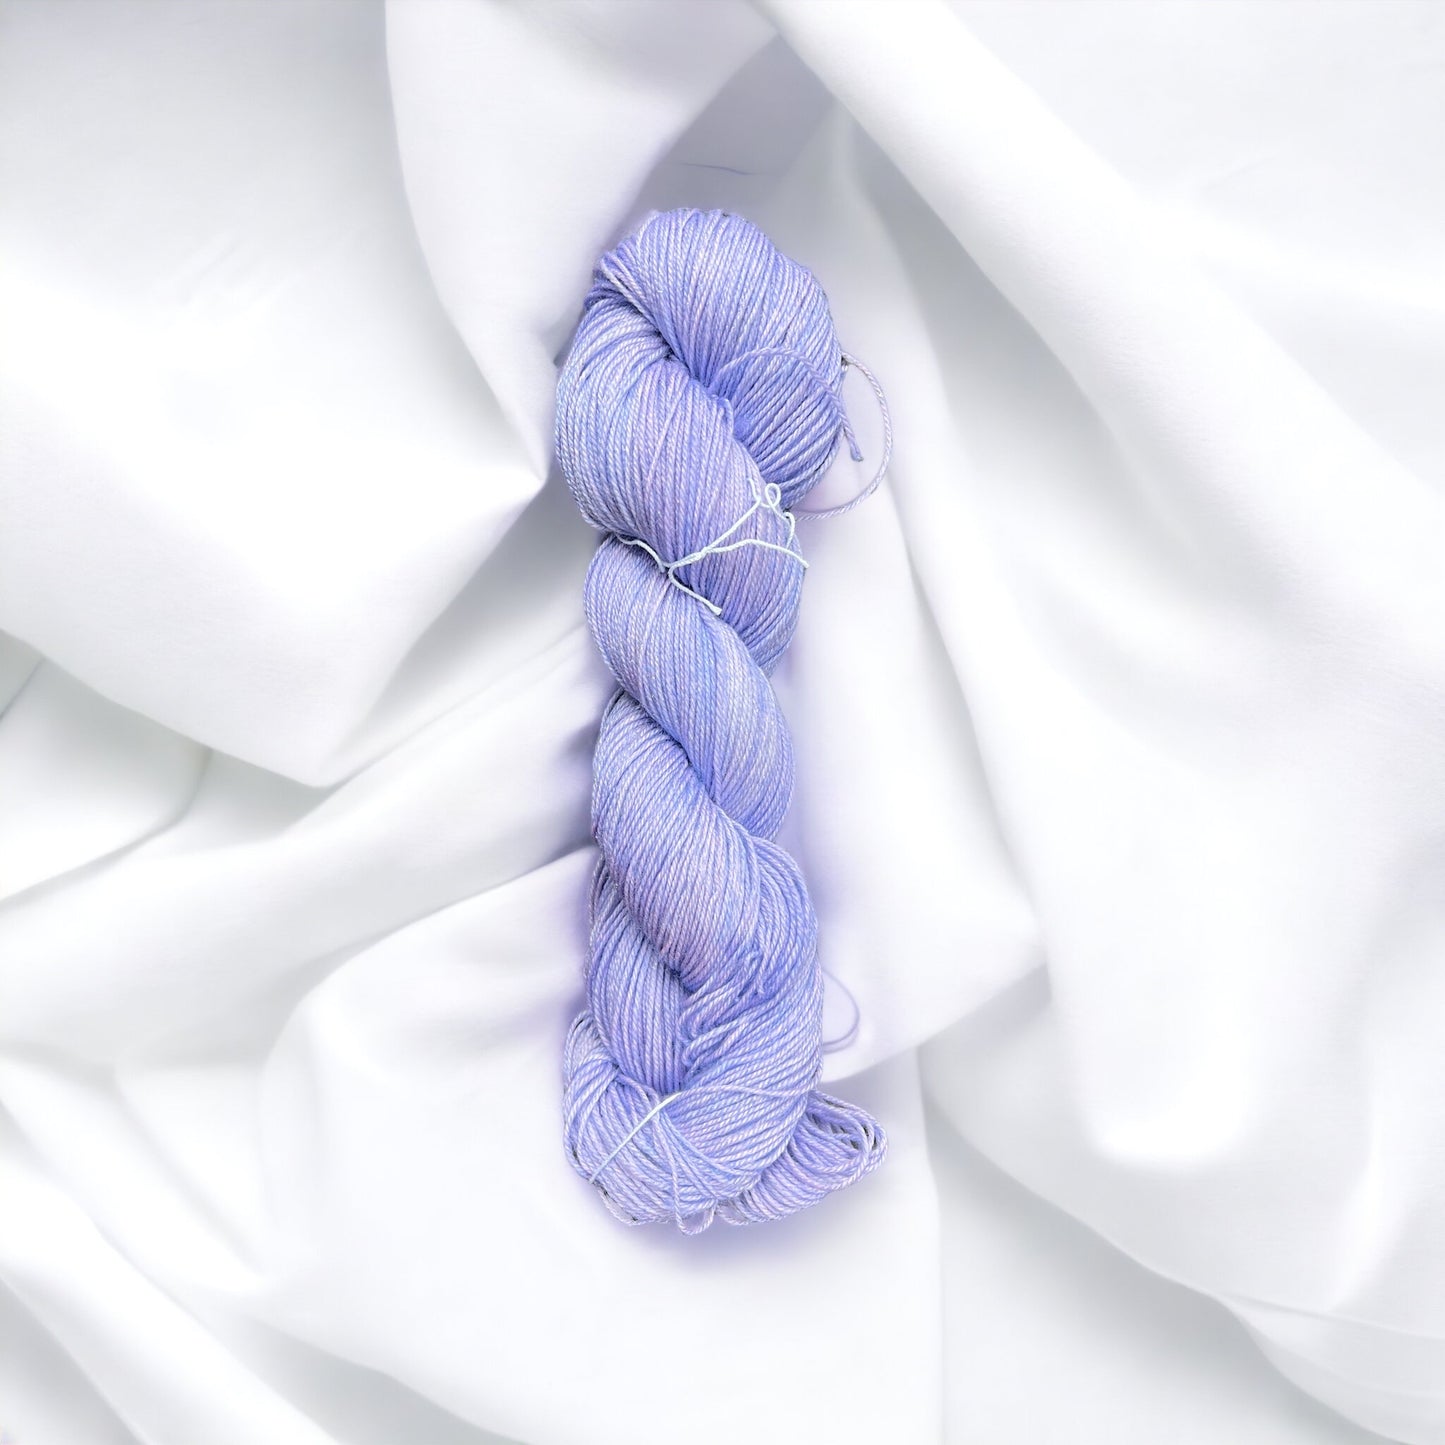 84/16 Superwash Merino/Sparkling Nylon sock yarn